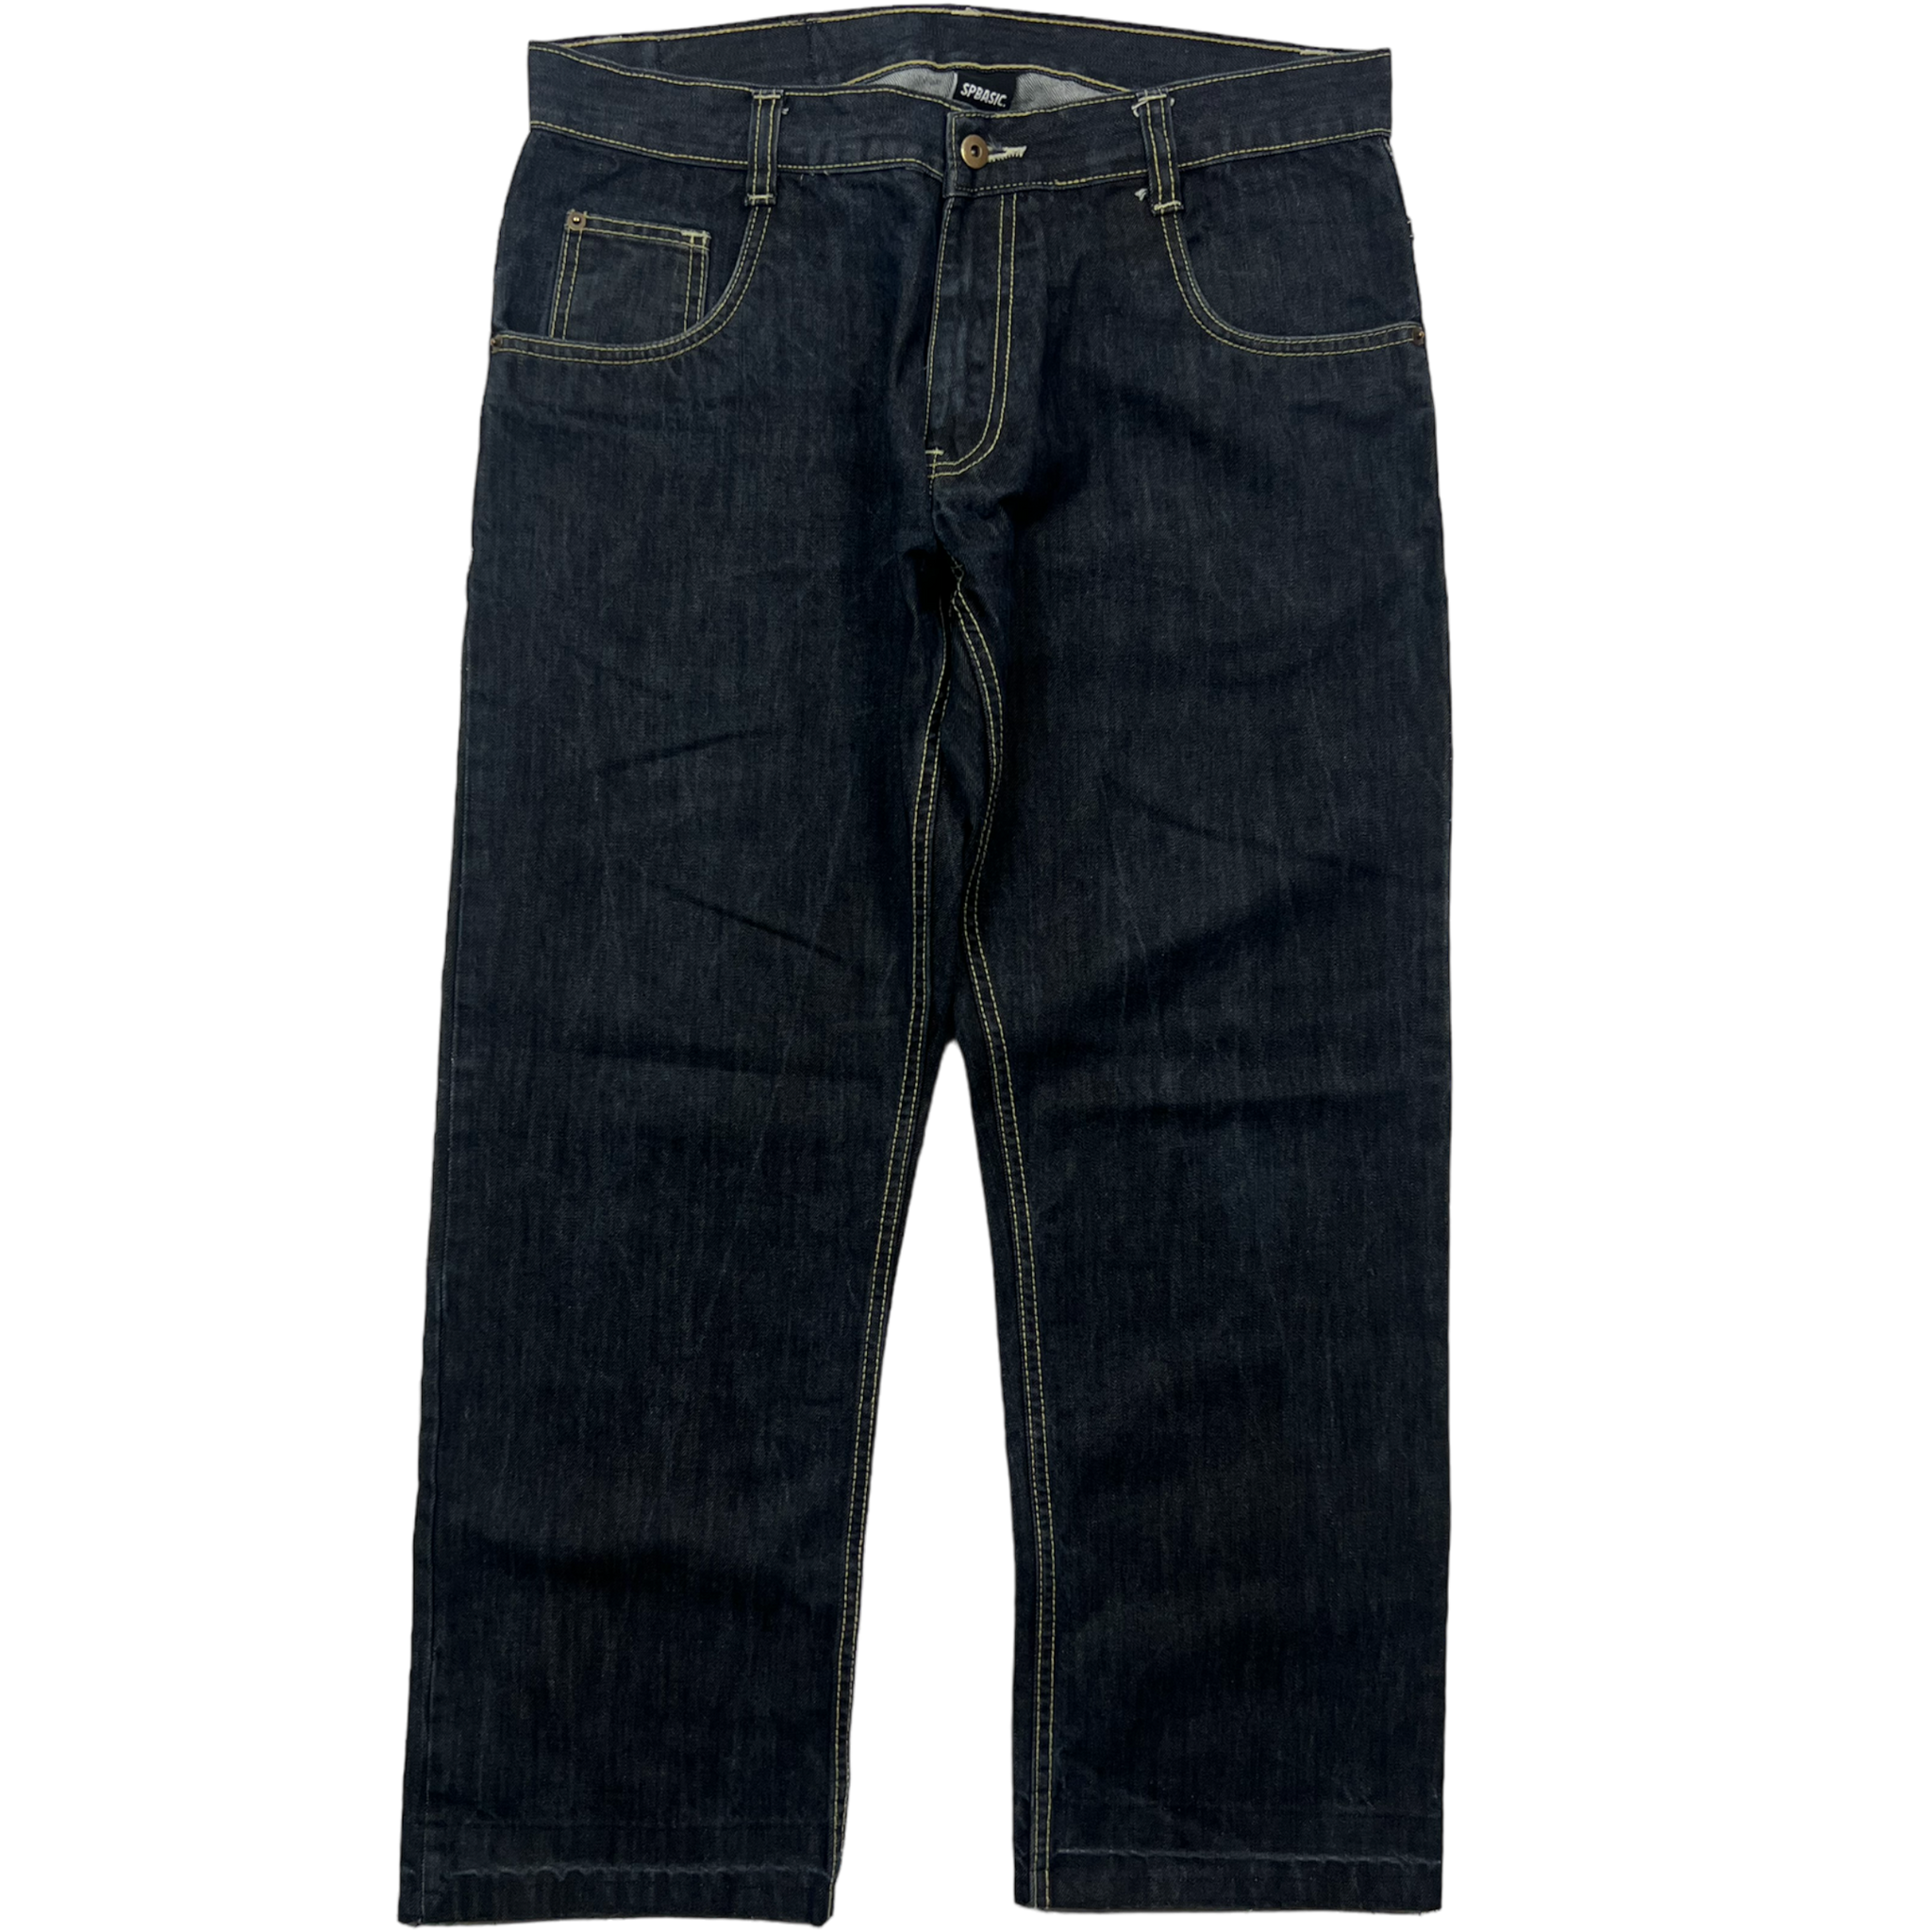 South Pole Jeans (36)